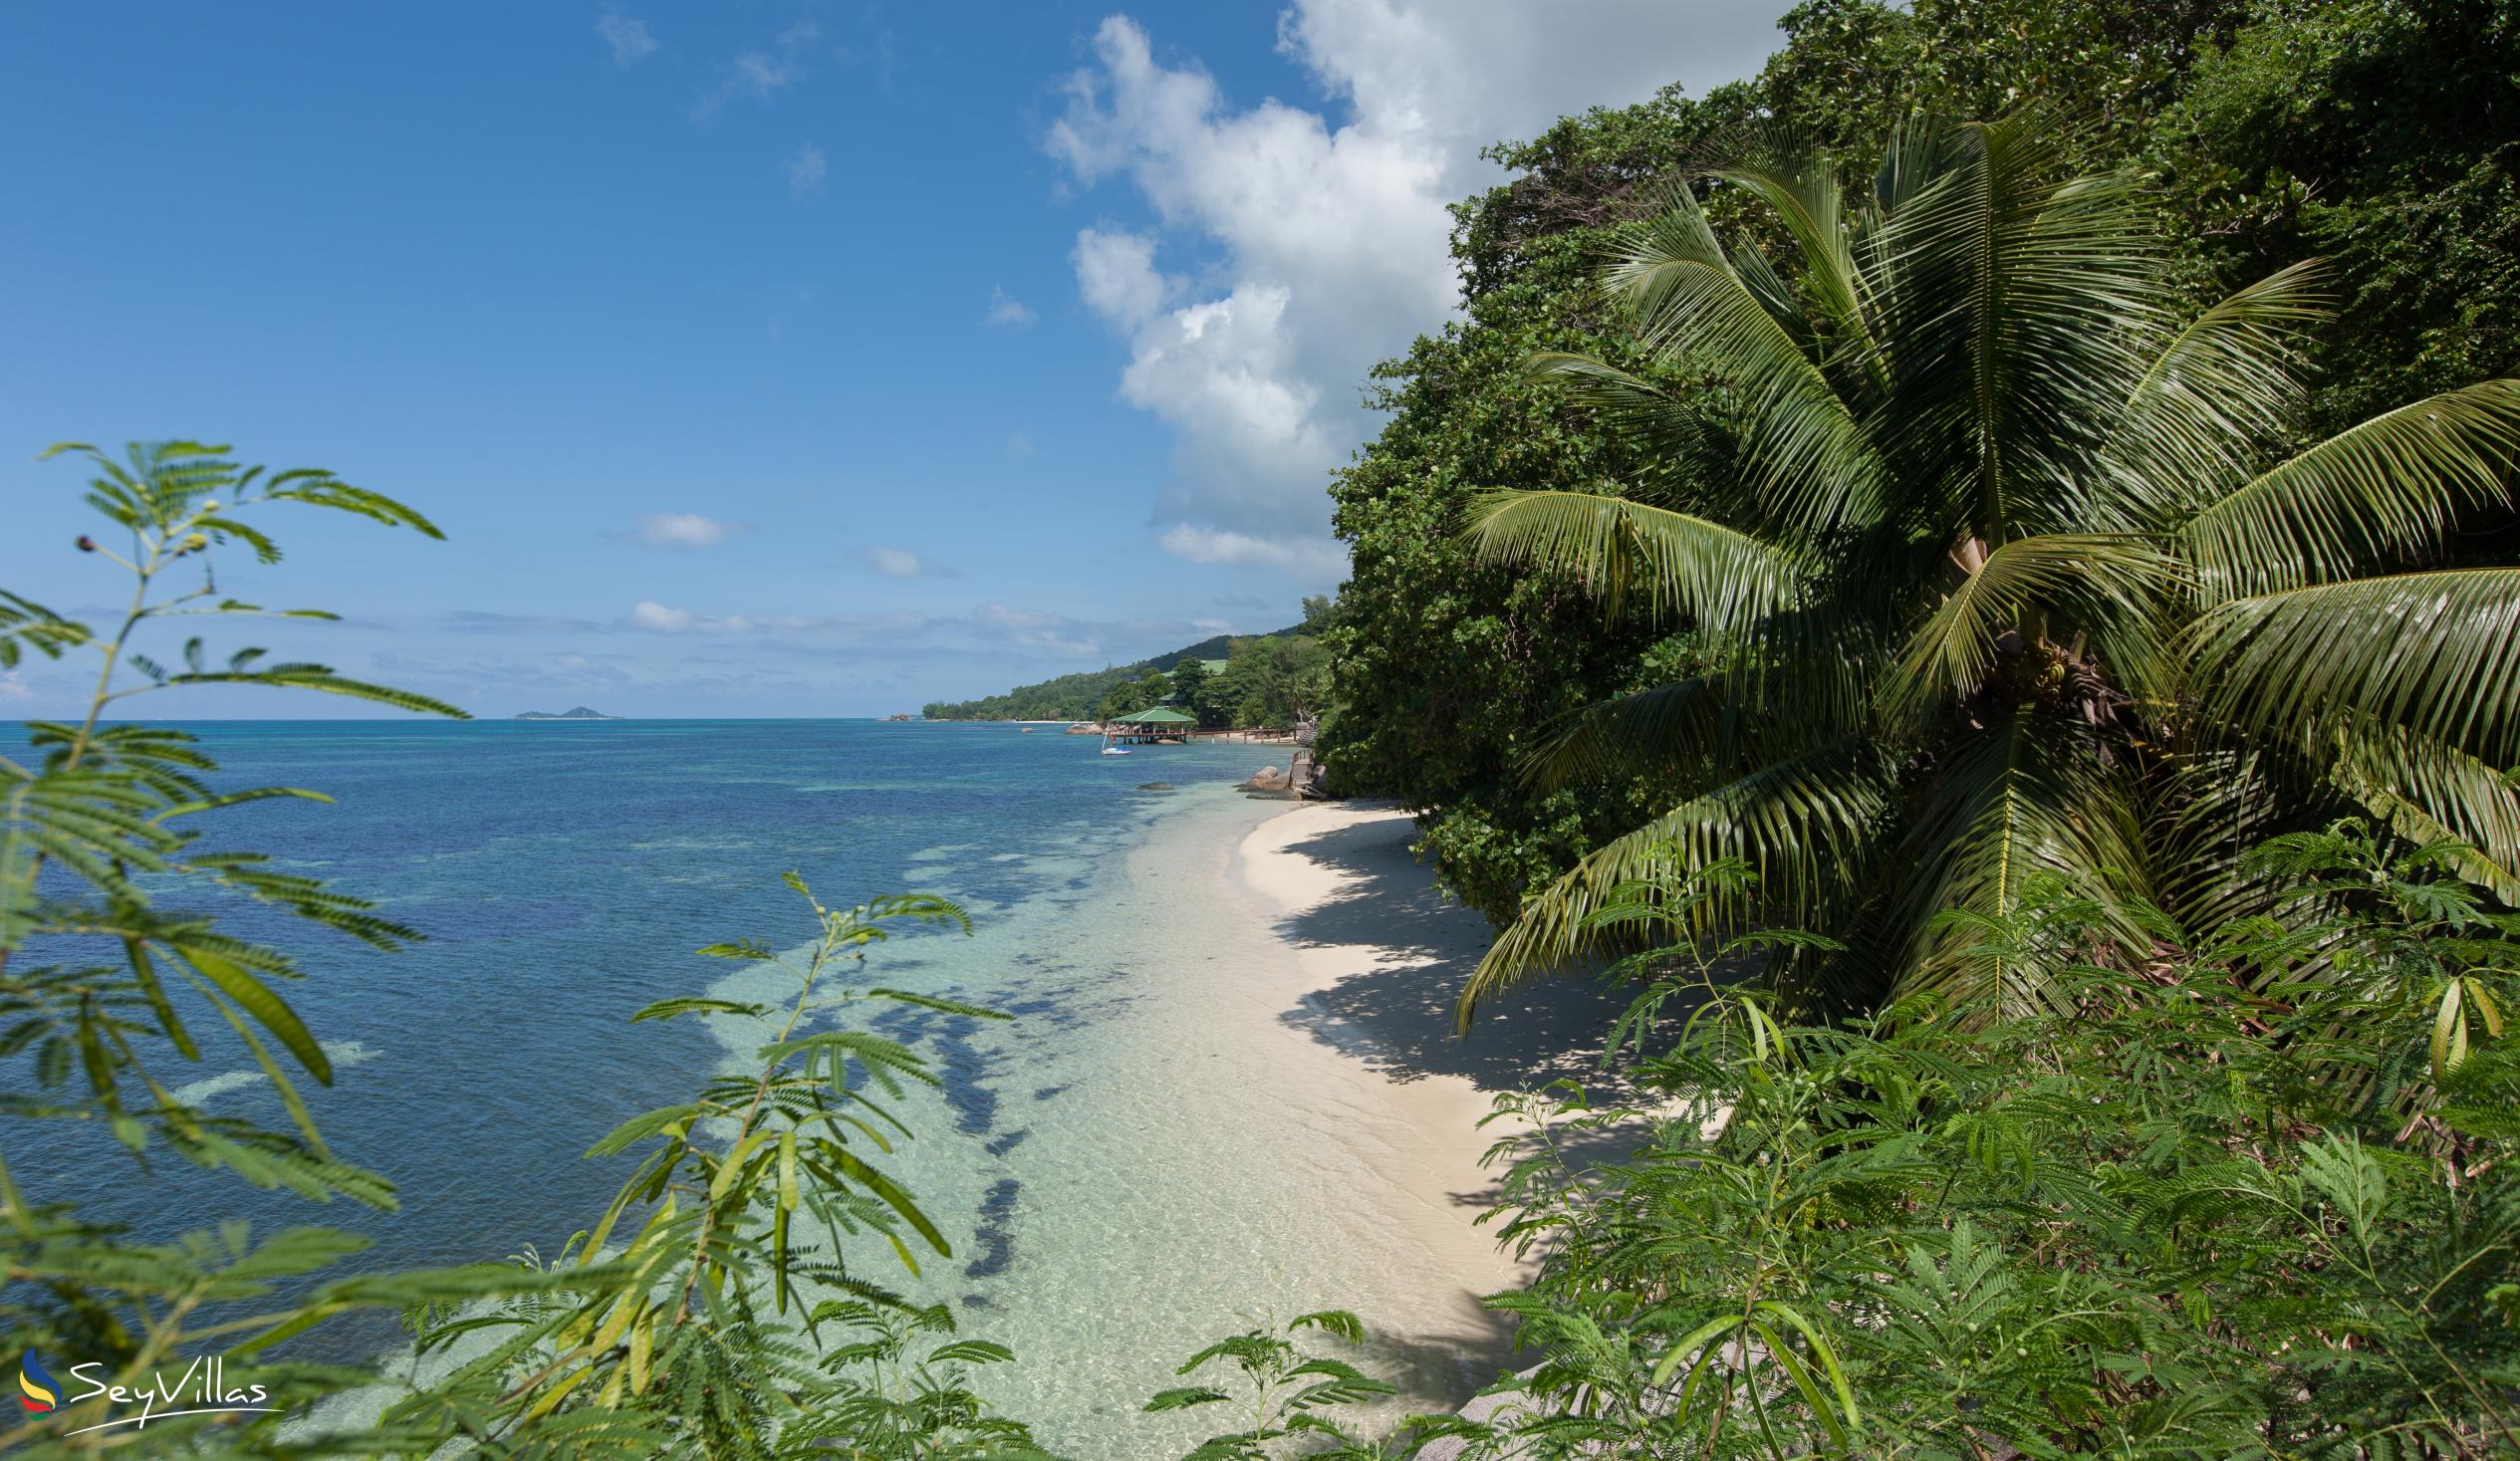 Photo 1: Anse Cimitière - Praslin (Seychelles)